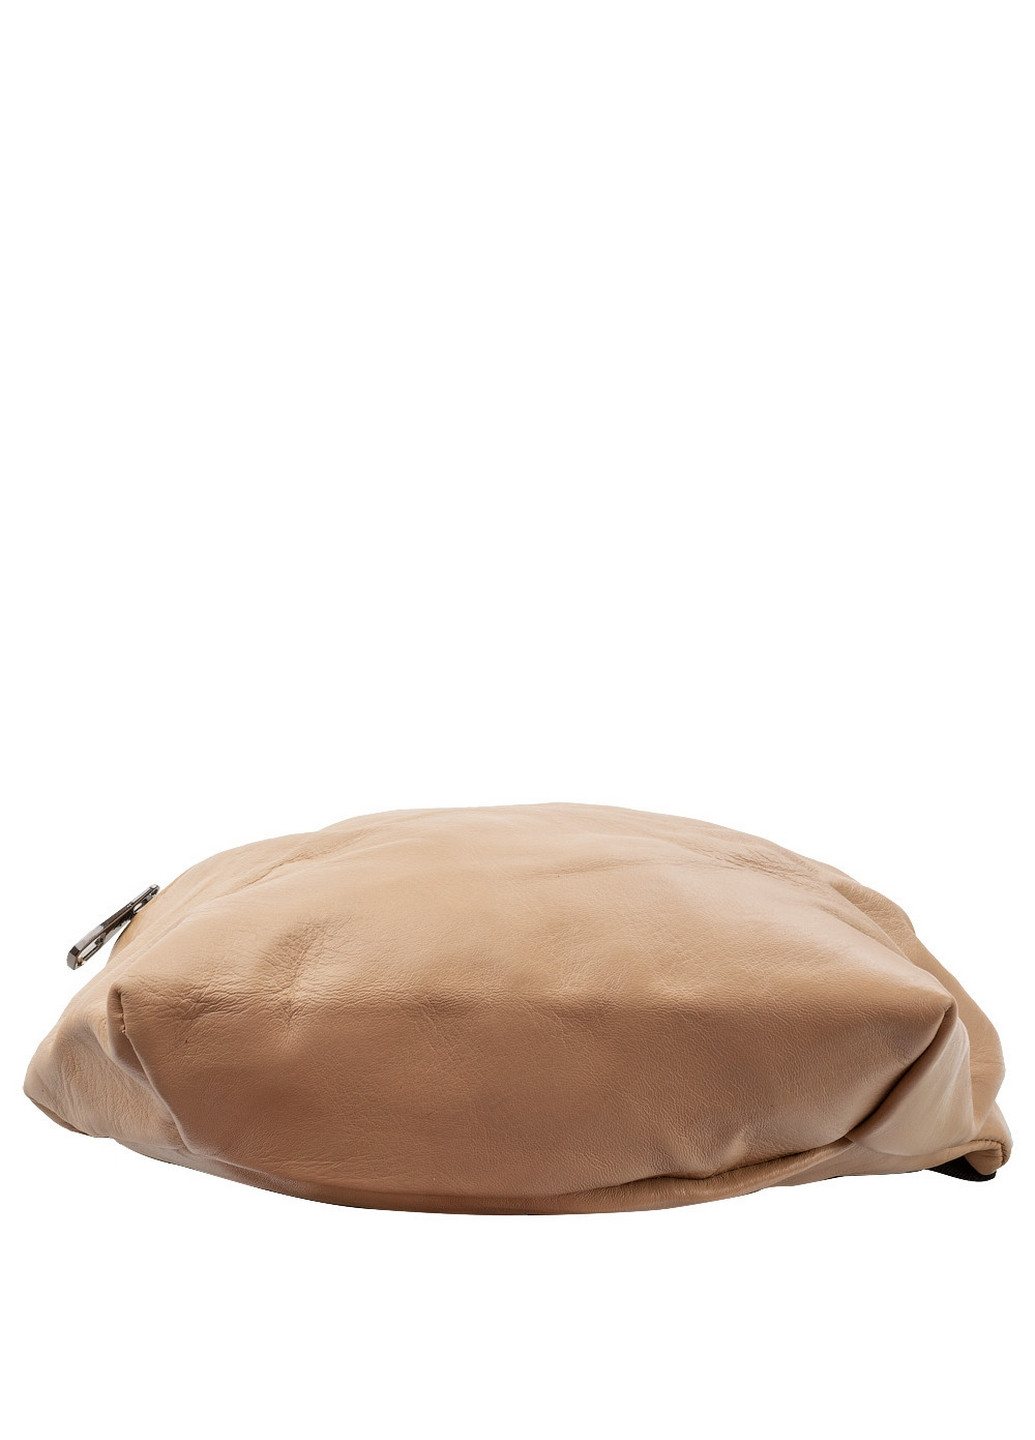 Женская кожаная сумка 31х16х7 см TuNoNa (275074925)